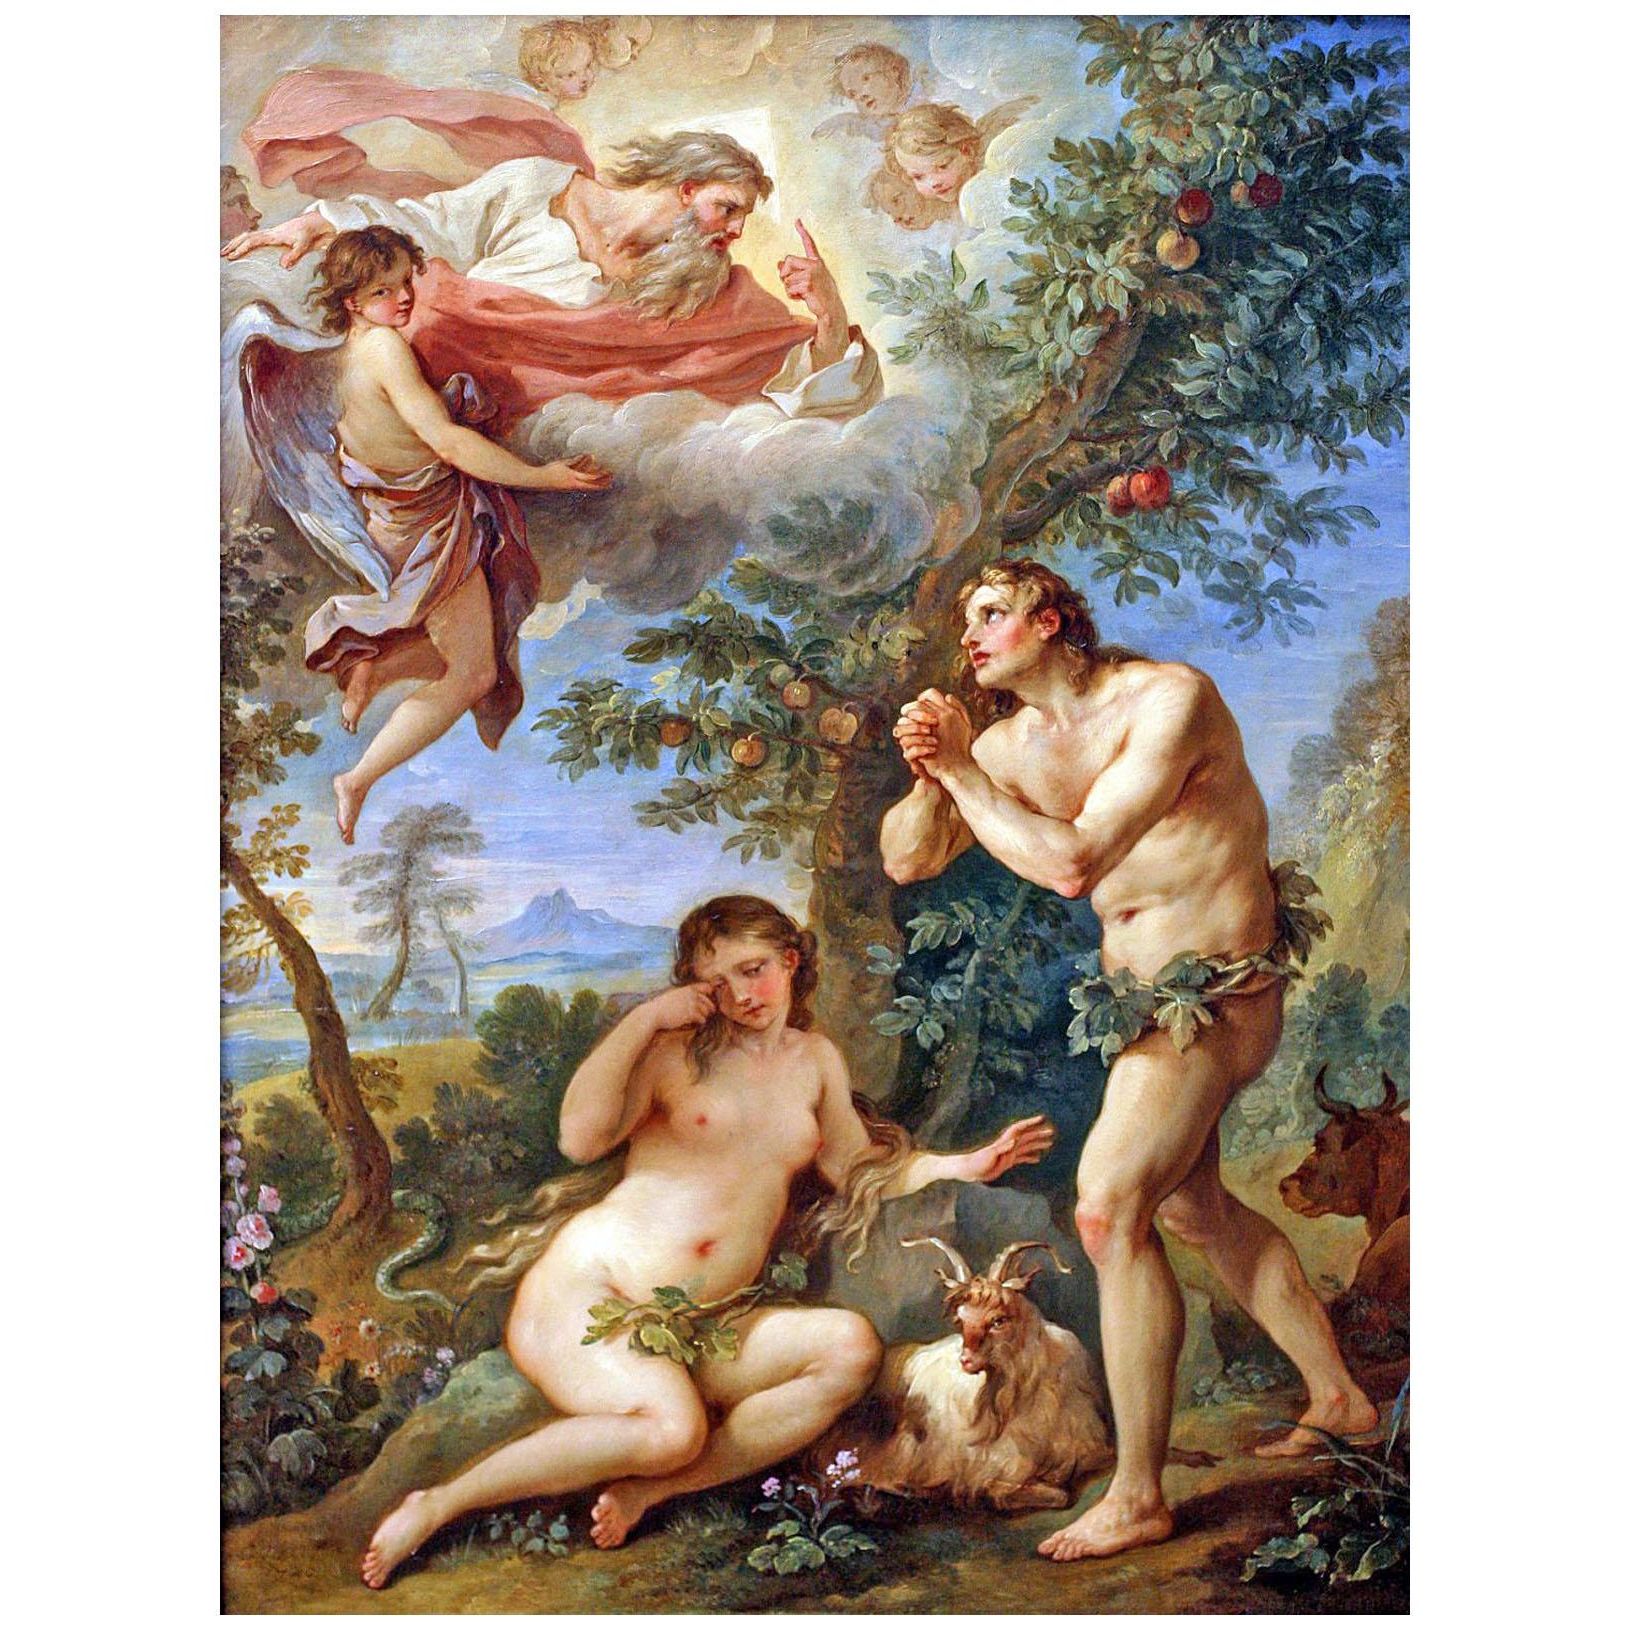 Charles-Joseph Natoire. Adam et Ève. 1740. Metropolitan Museum NY